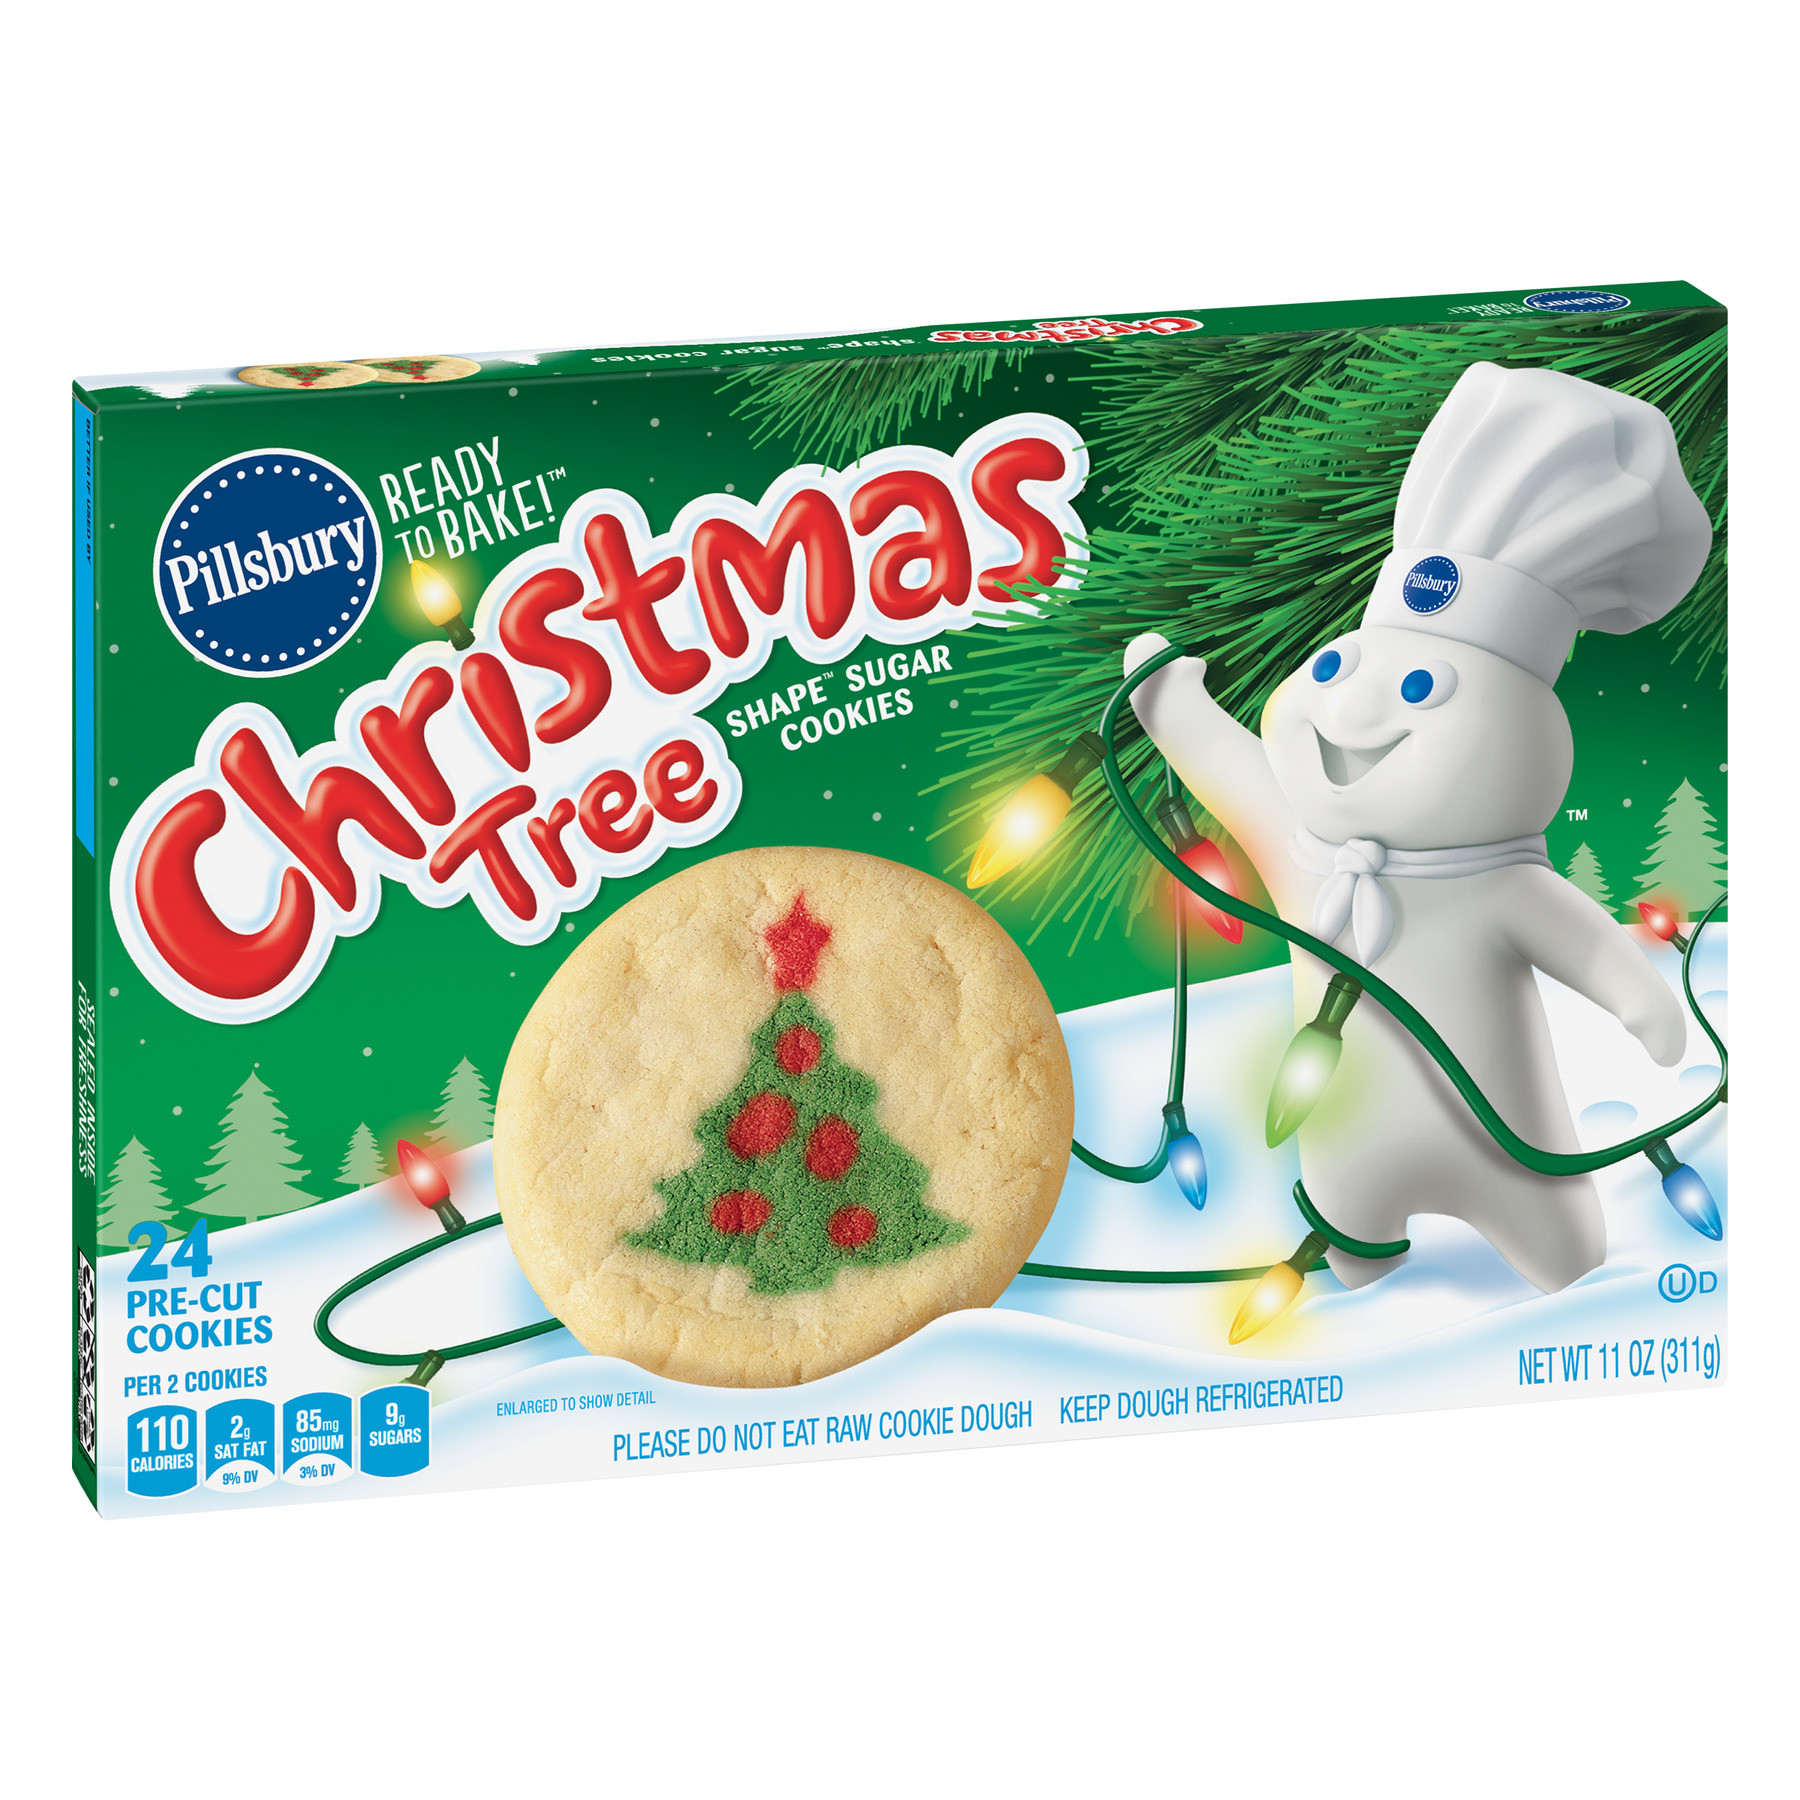 Christmas Sugar Cookies Walmart
 Pillsbury Ready to Bake Christmas Tree Shape Sugar